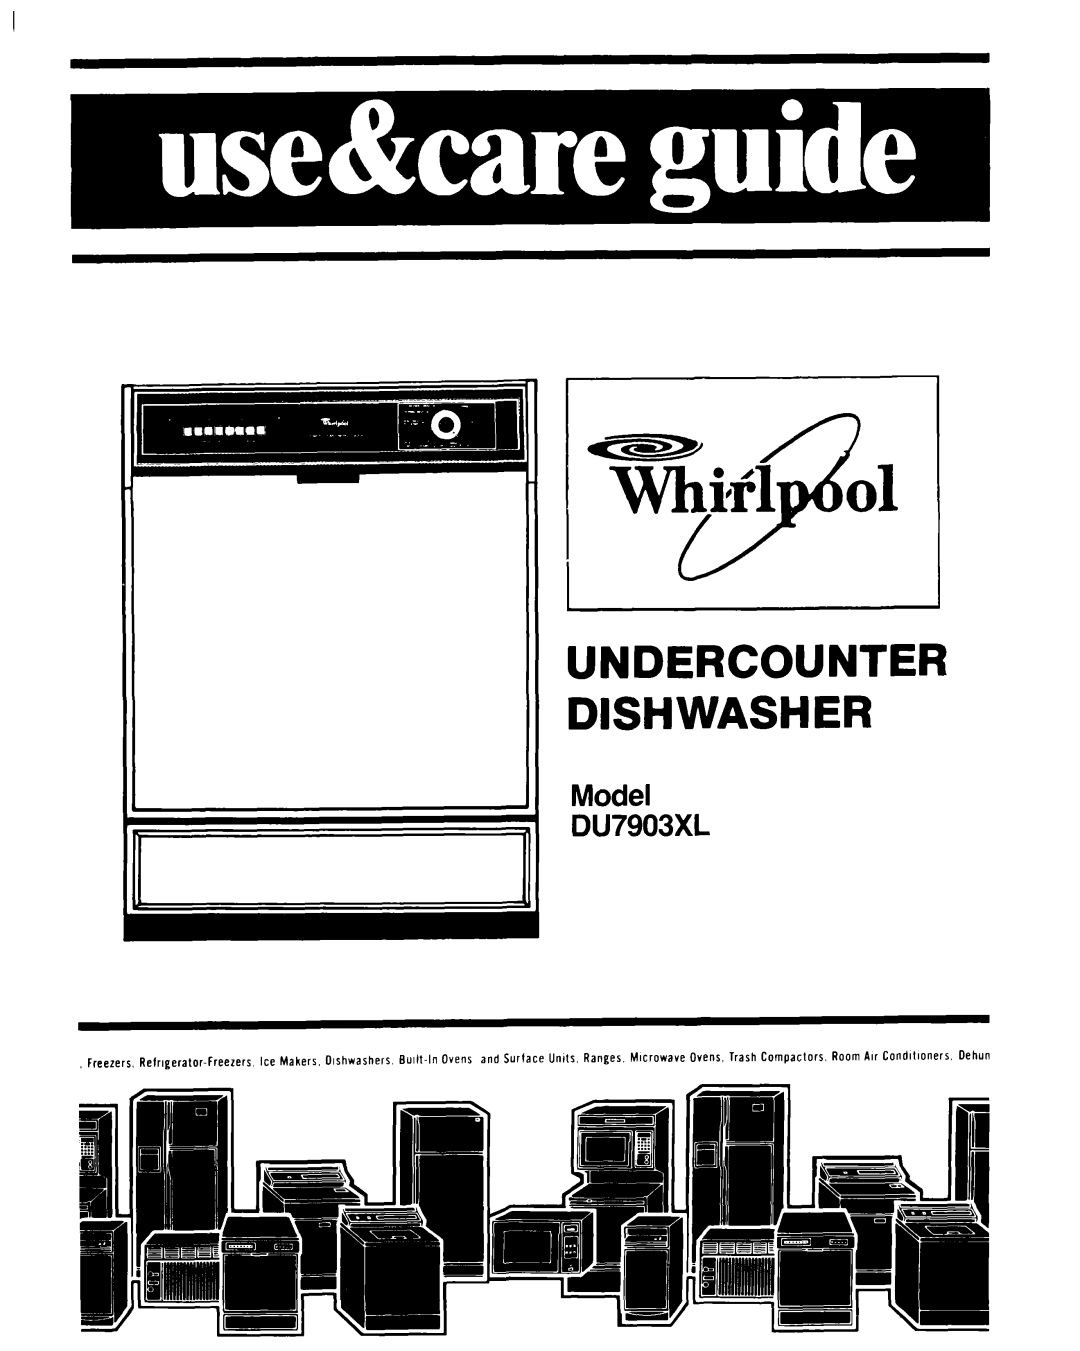 Whirlpool manual Undercounter Dishwasher, Model DU7903XL 